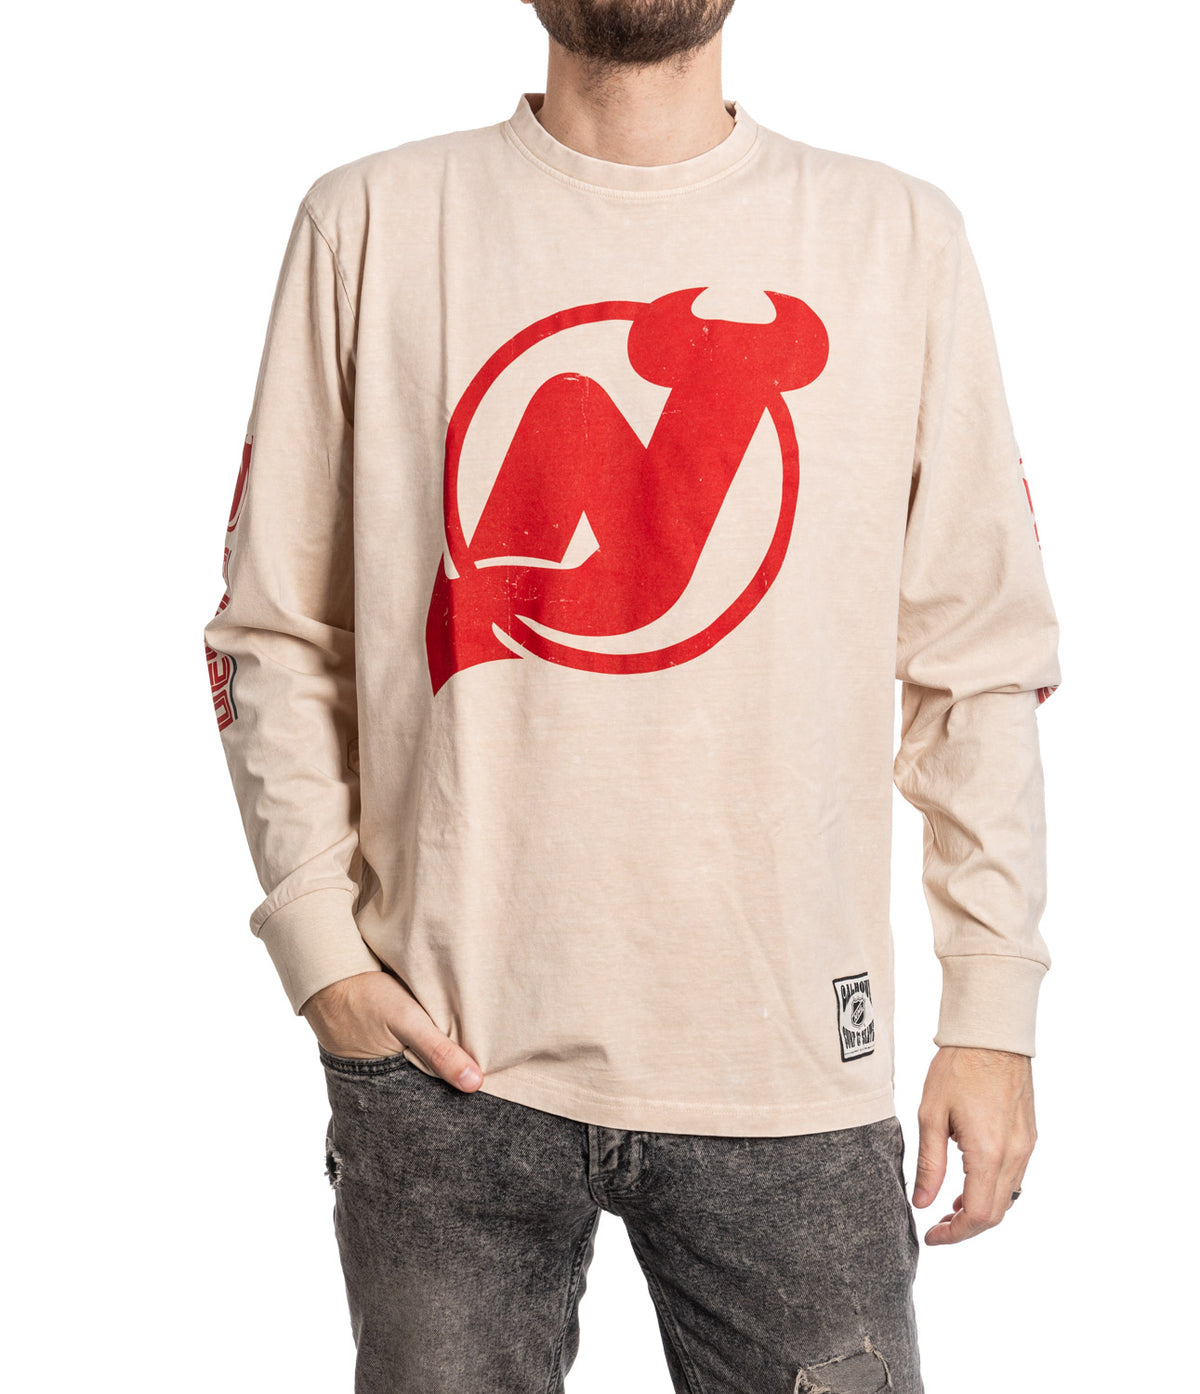 New Jersey Devils Men's Distressed Logo Long-Sleeve Shirt